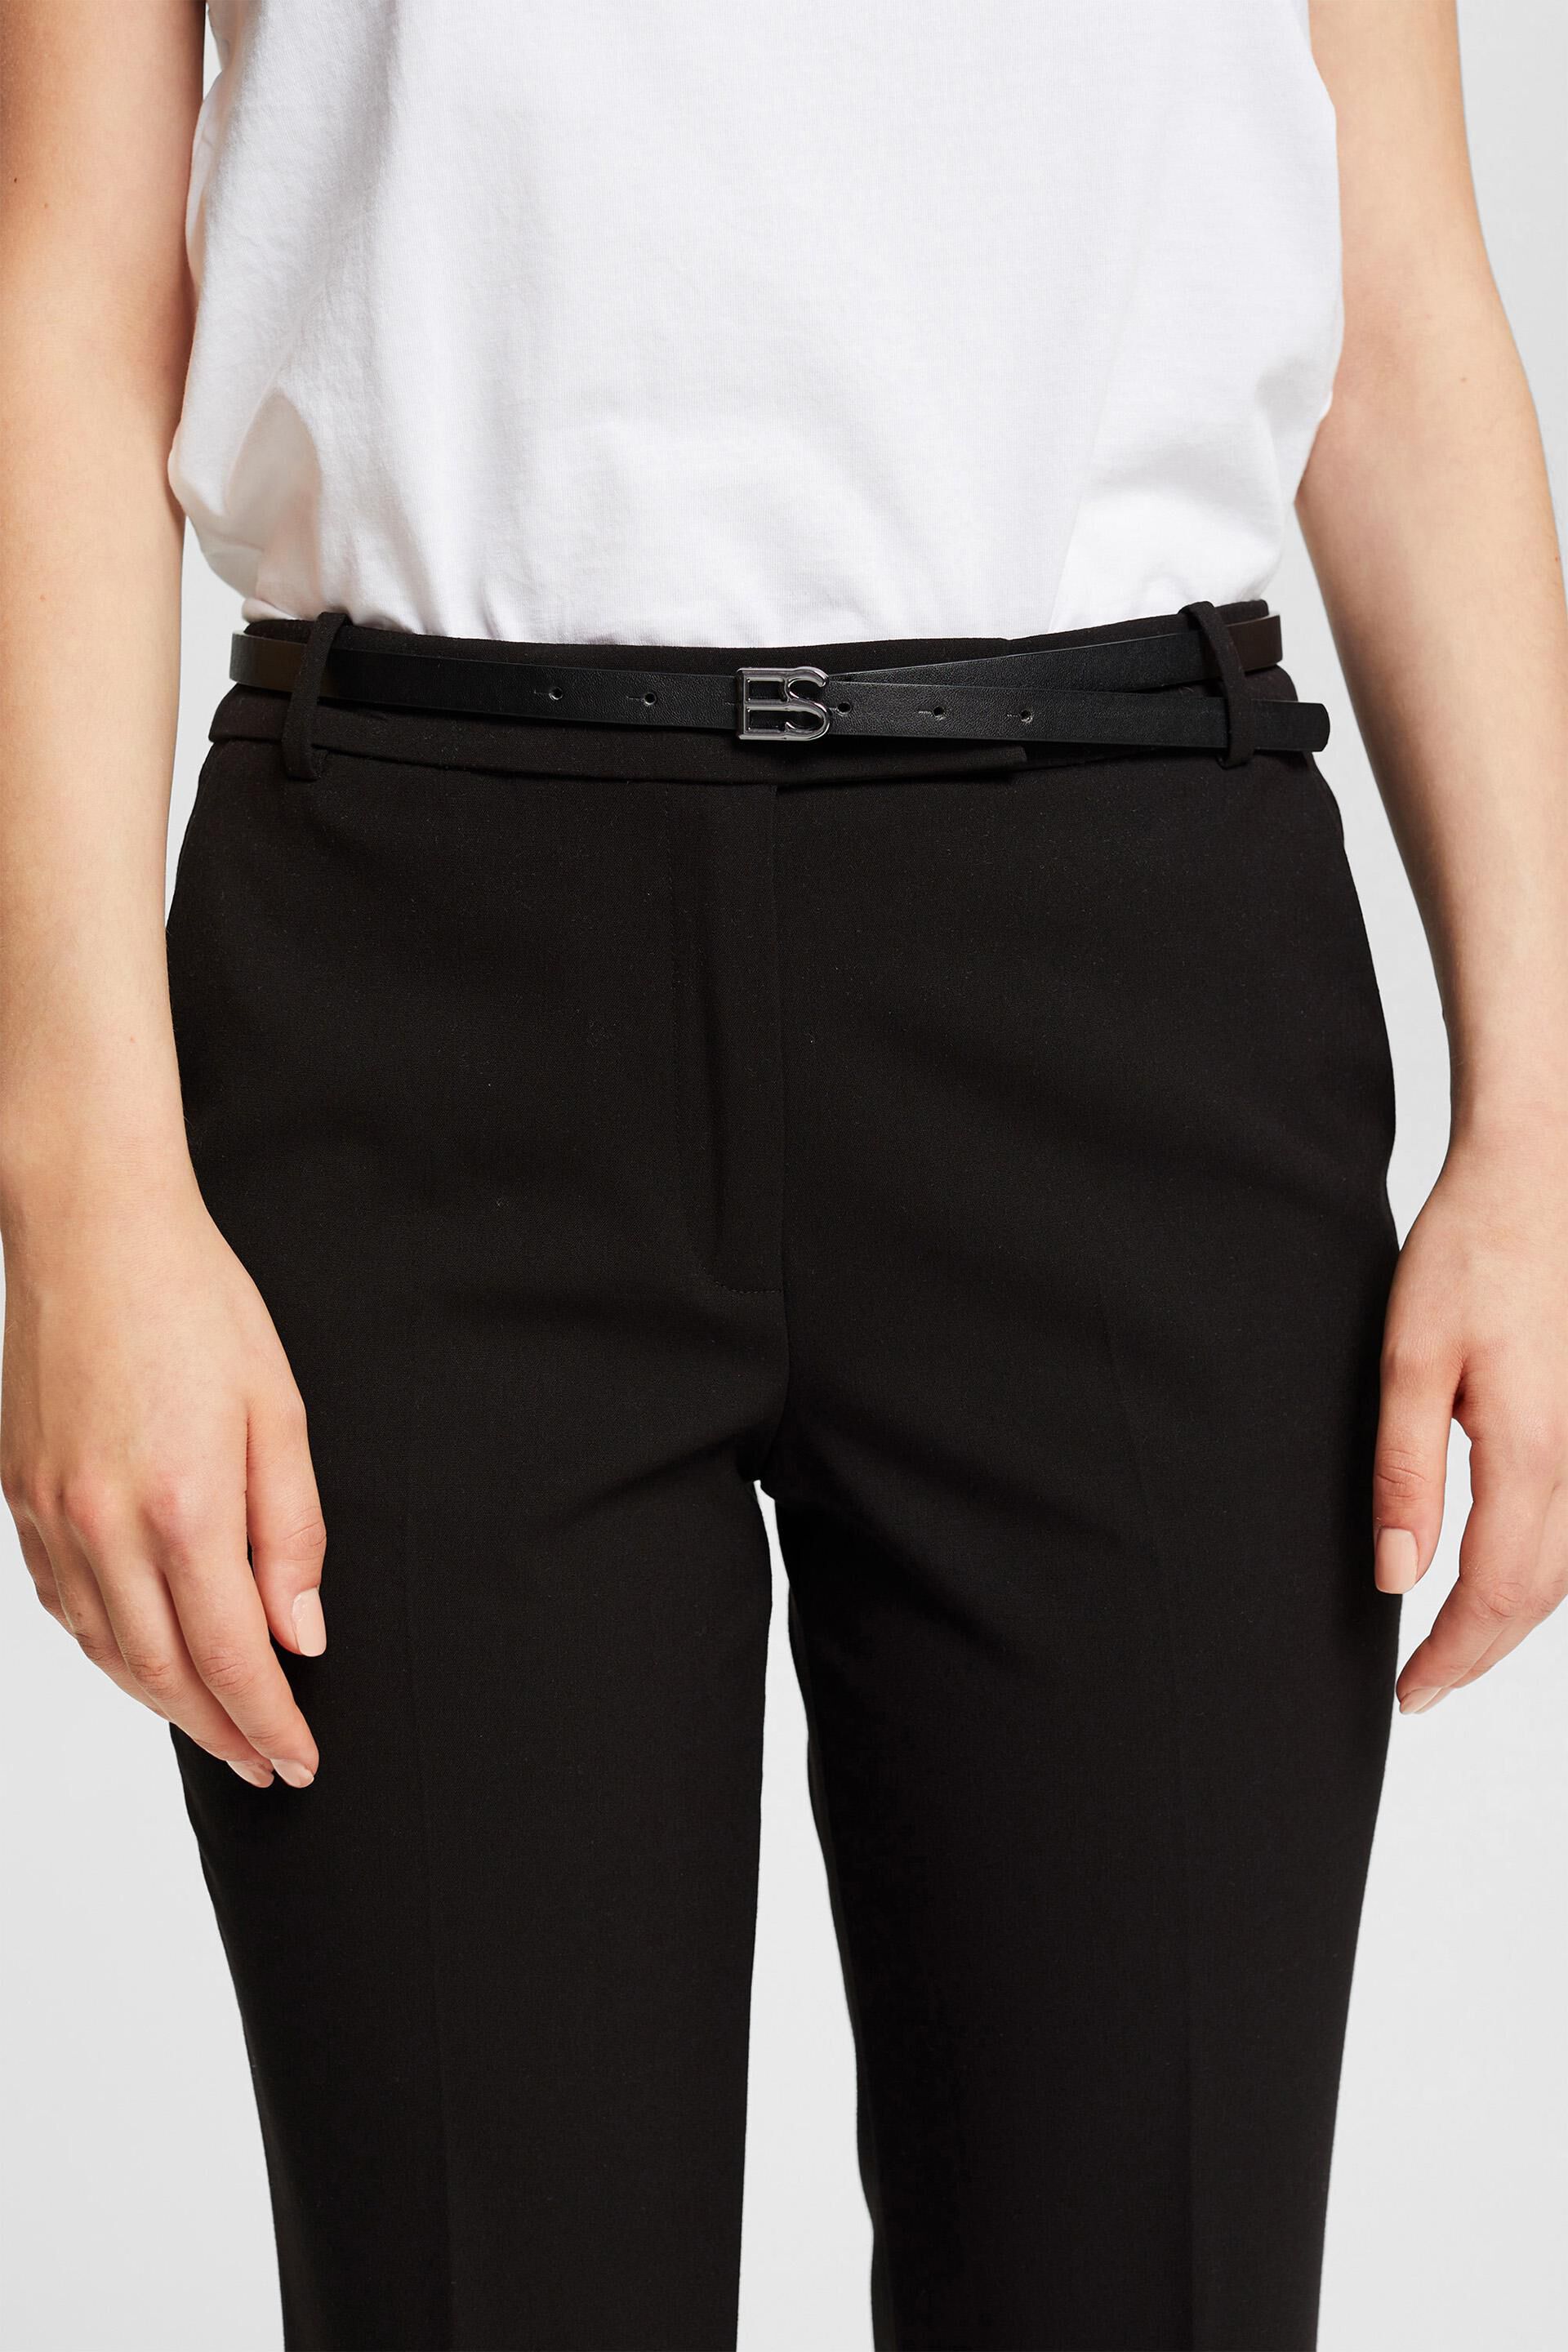 Girls Black Plain Skinny Trousers | New Look